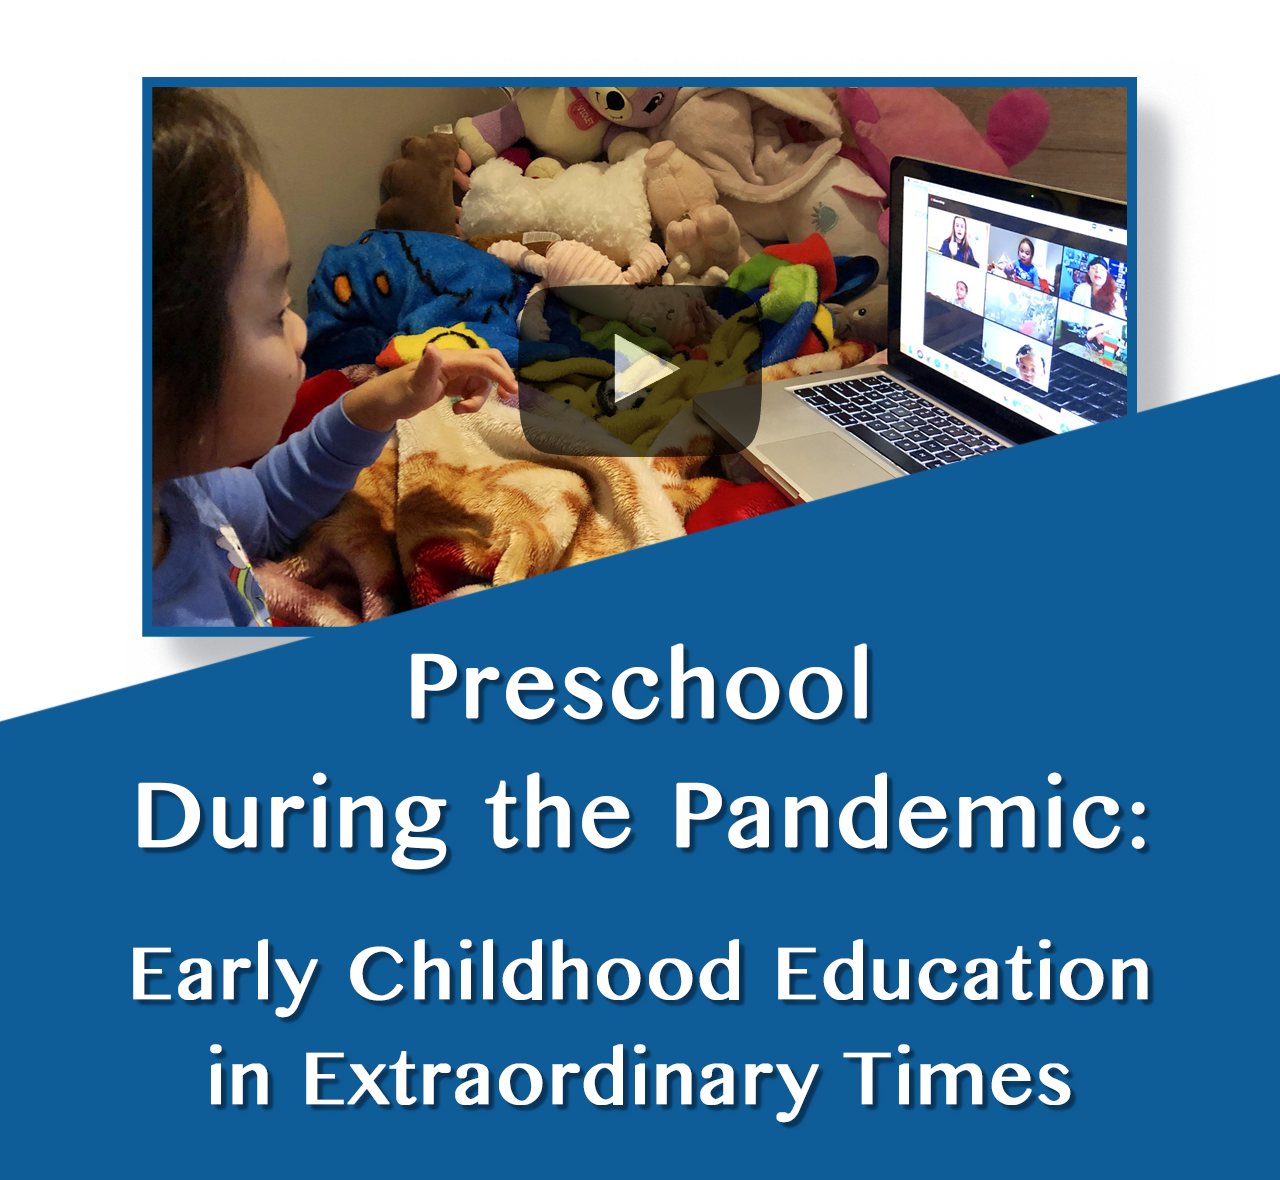 Video Series: Preschool During the Pandemic